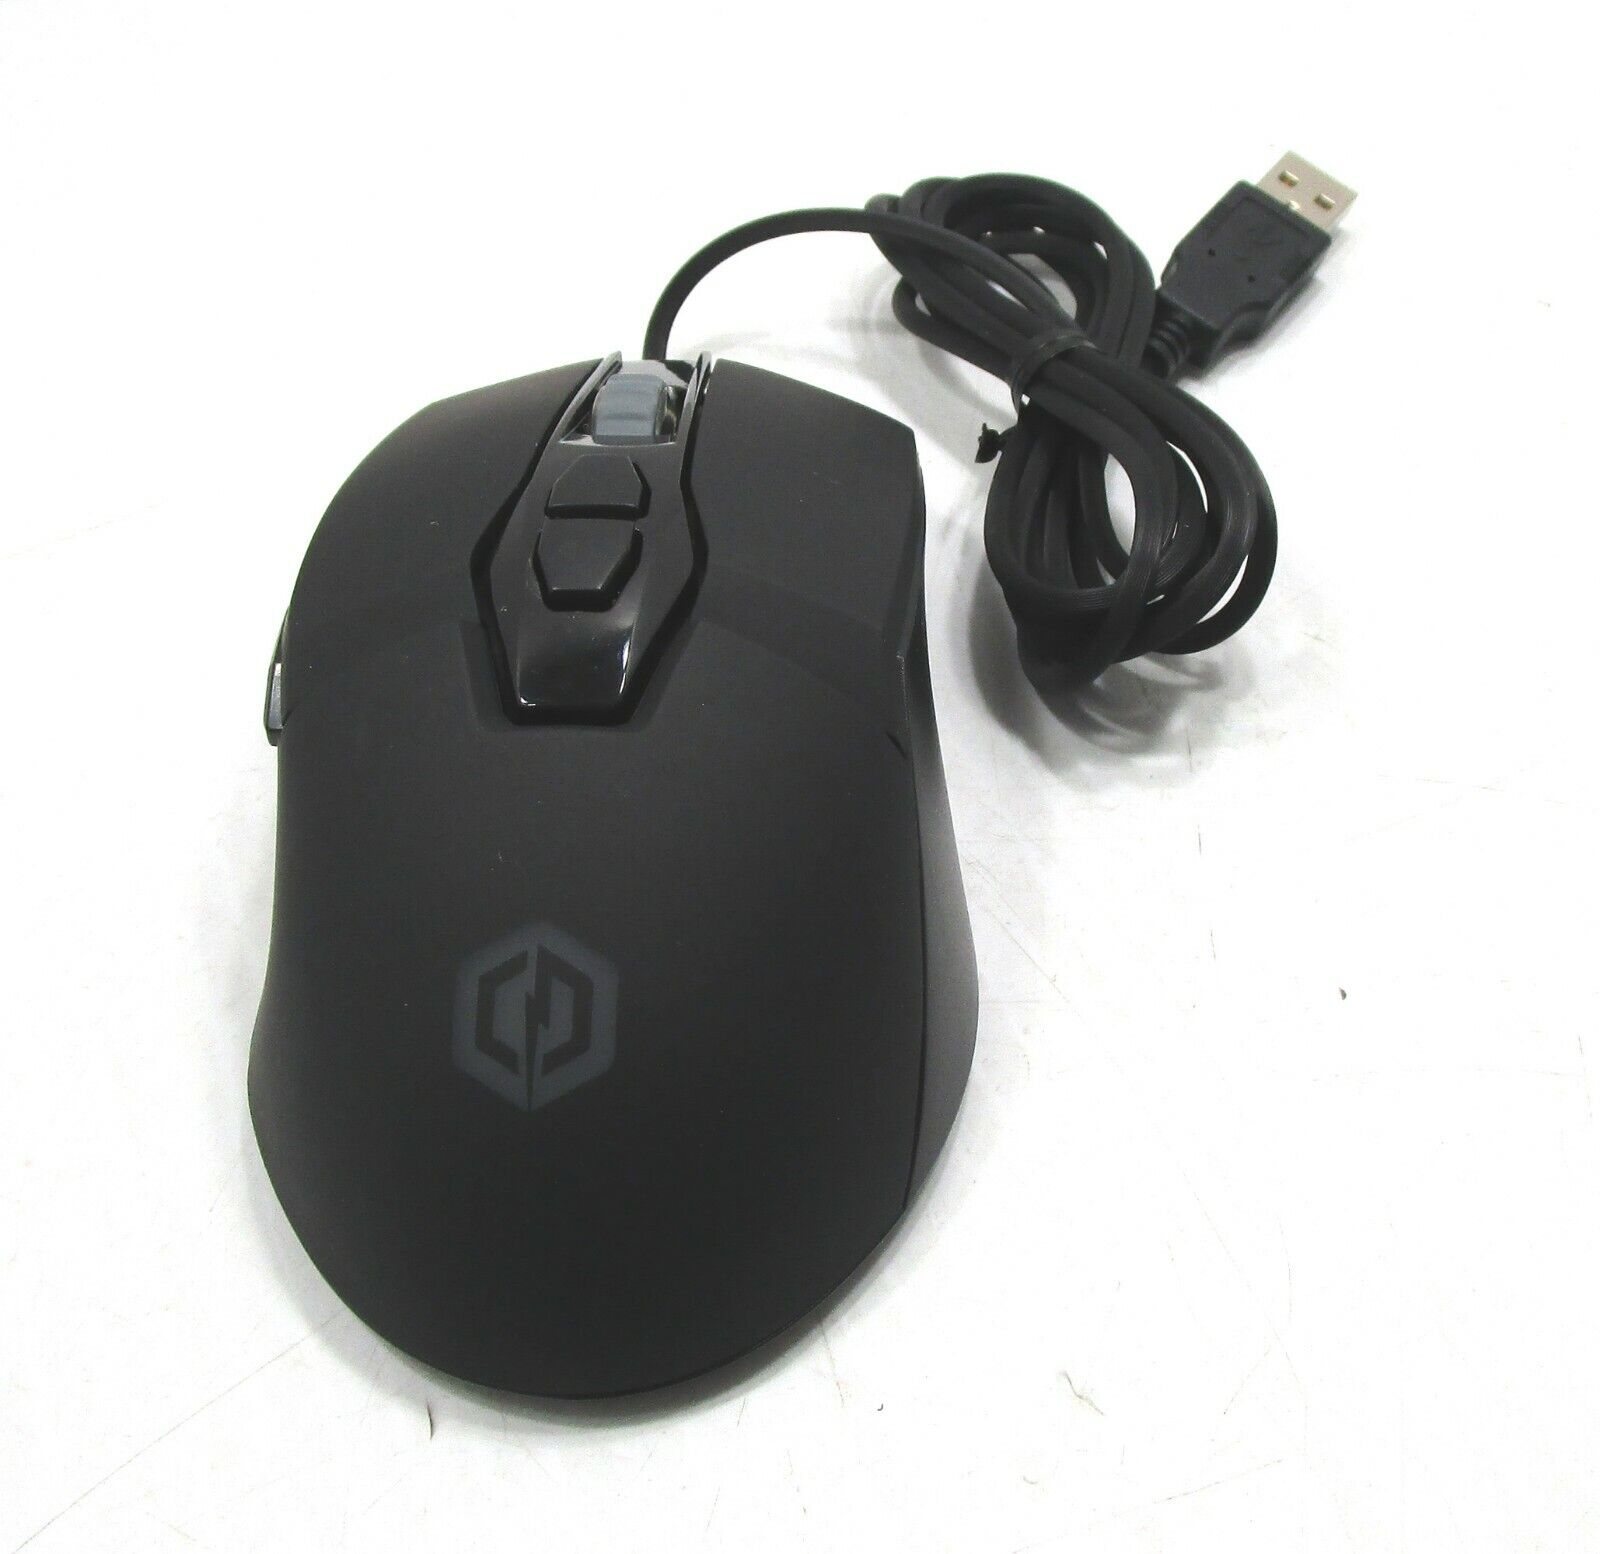 CYBERPOWERPC Elite M1-131 RGB USB Optical Gaming Mouse 6000DPI 